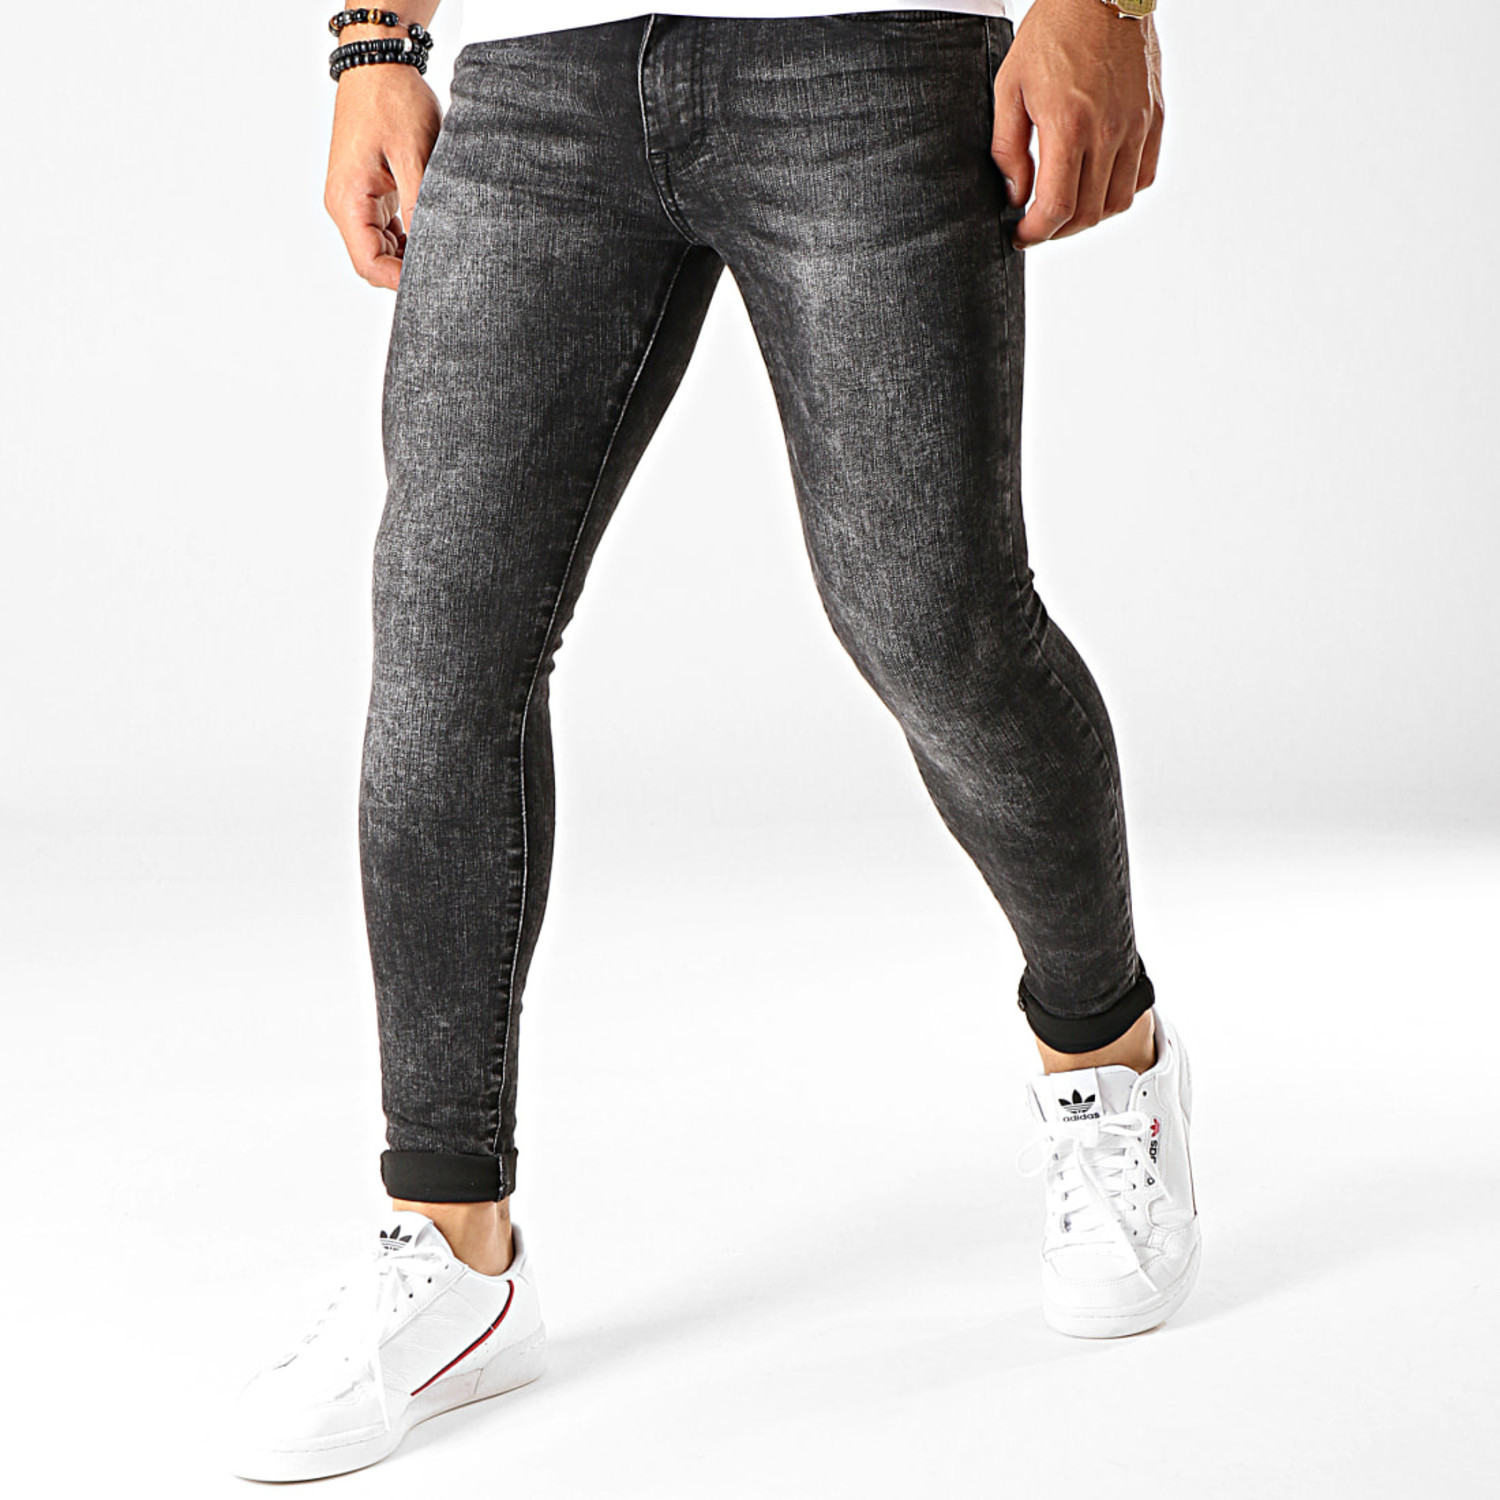 Heren Jeans Skinny Sale United Kingdom, SAVE 52% - horiconphoenix.com